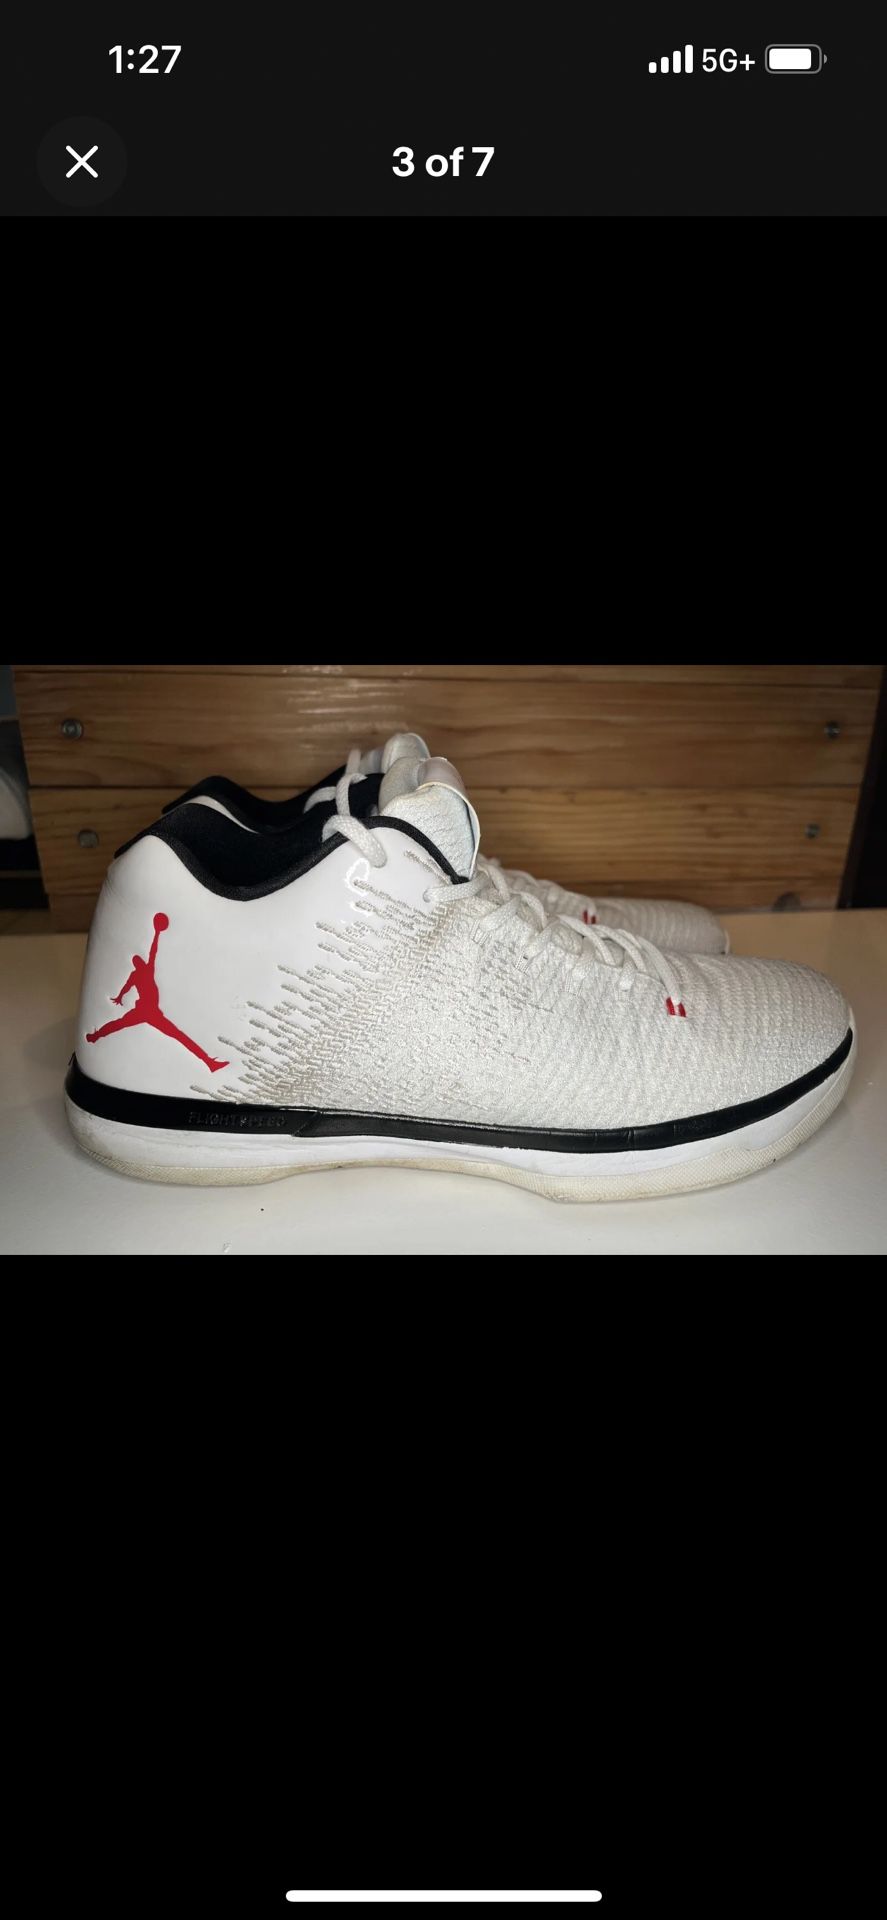 Nike Air Jordan - 31 XXXL Low Chicago Bulls - White Shoes - 897564-101 - Size 11